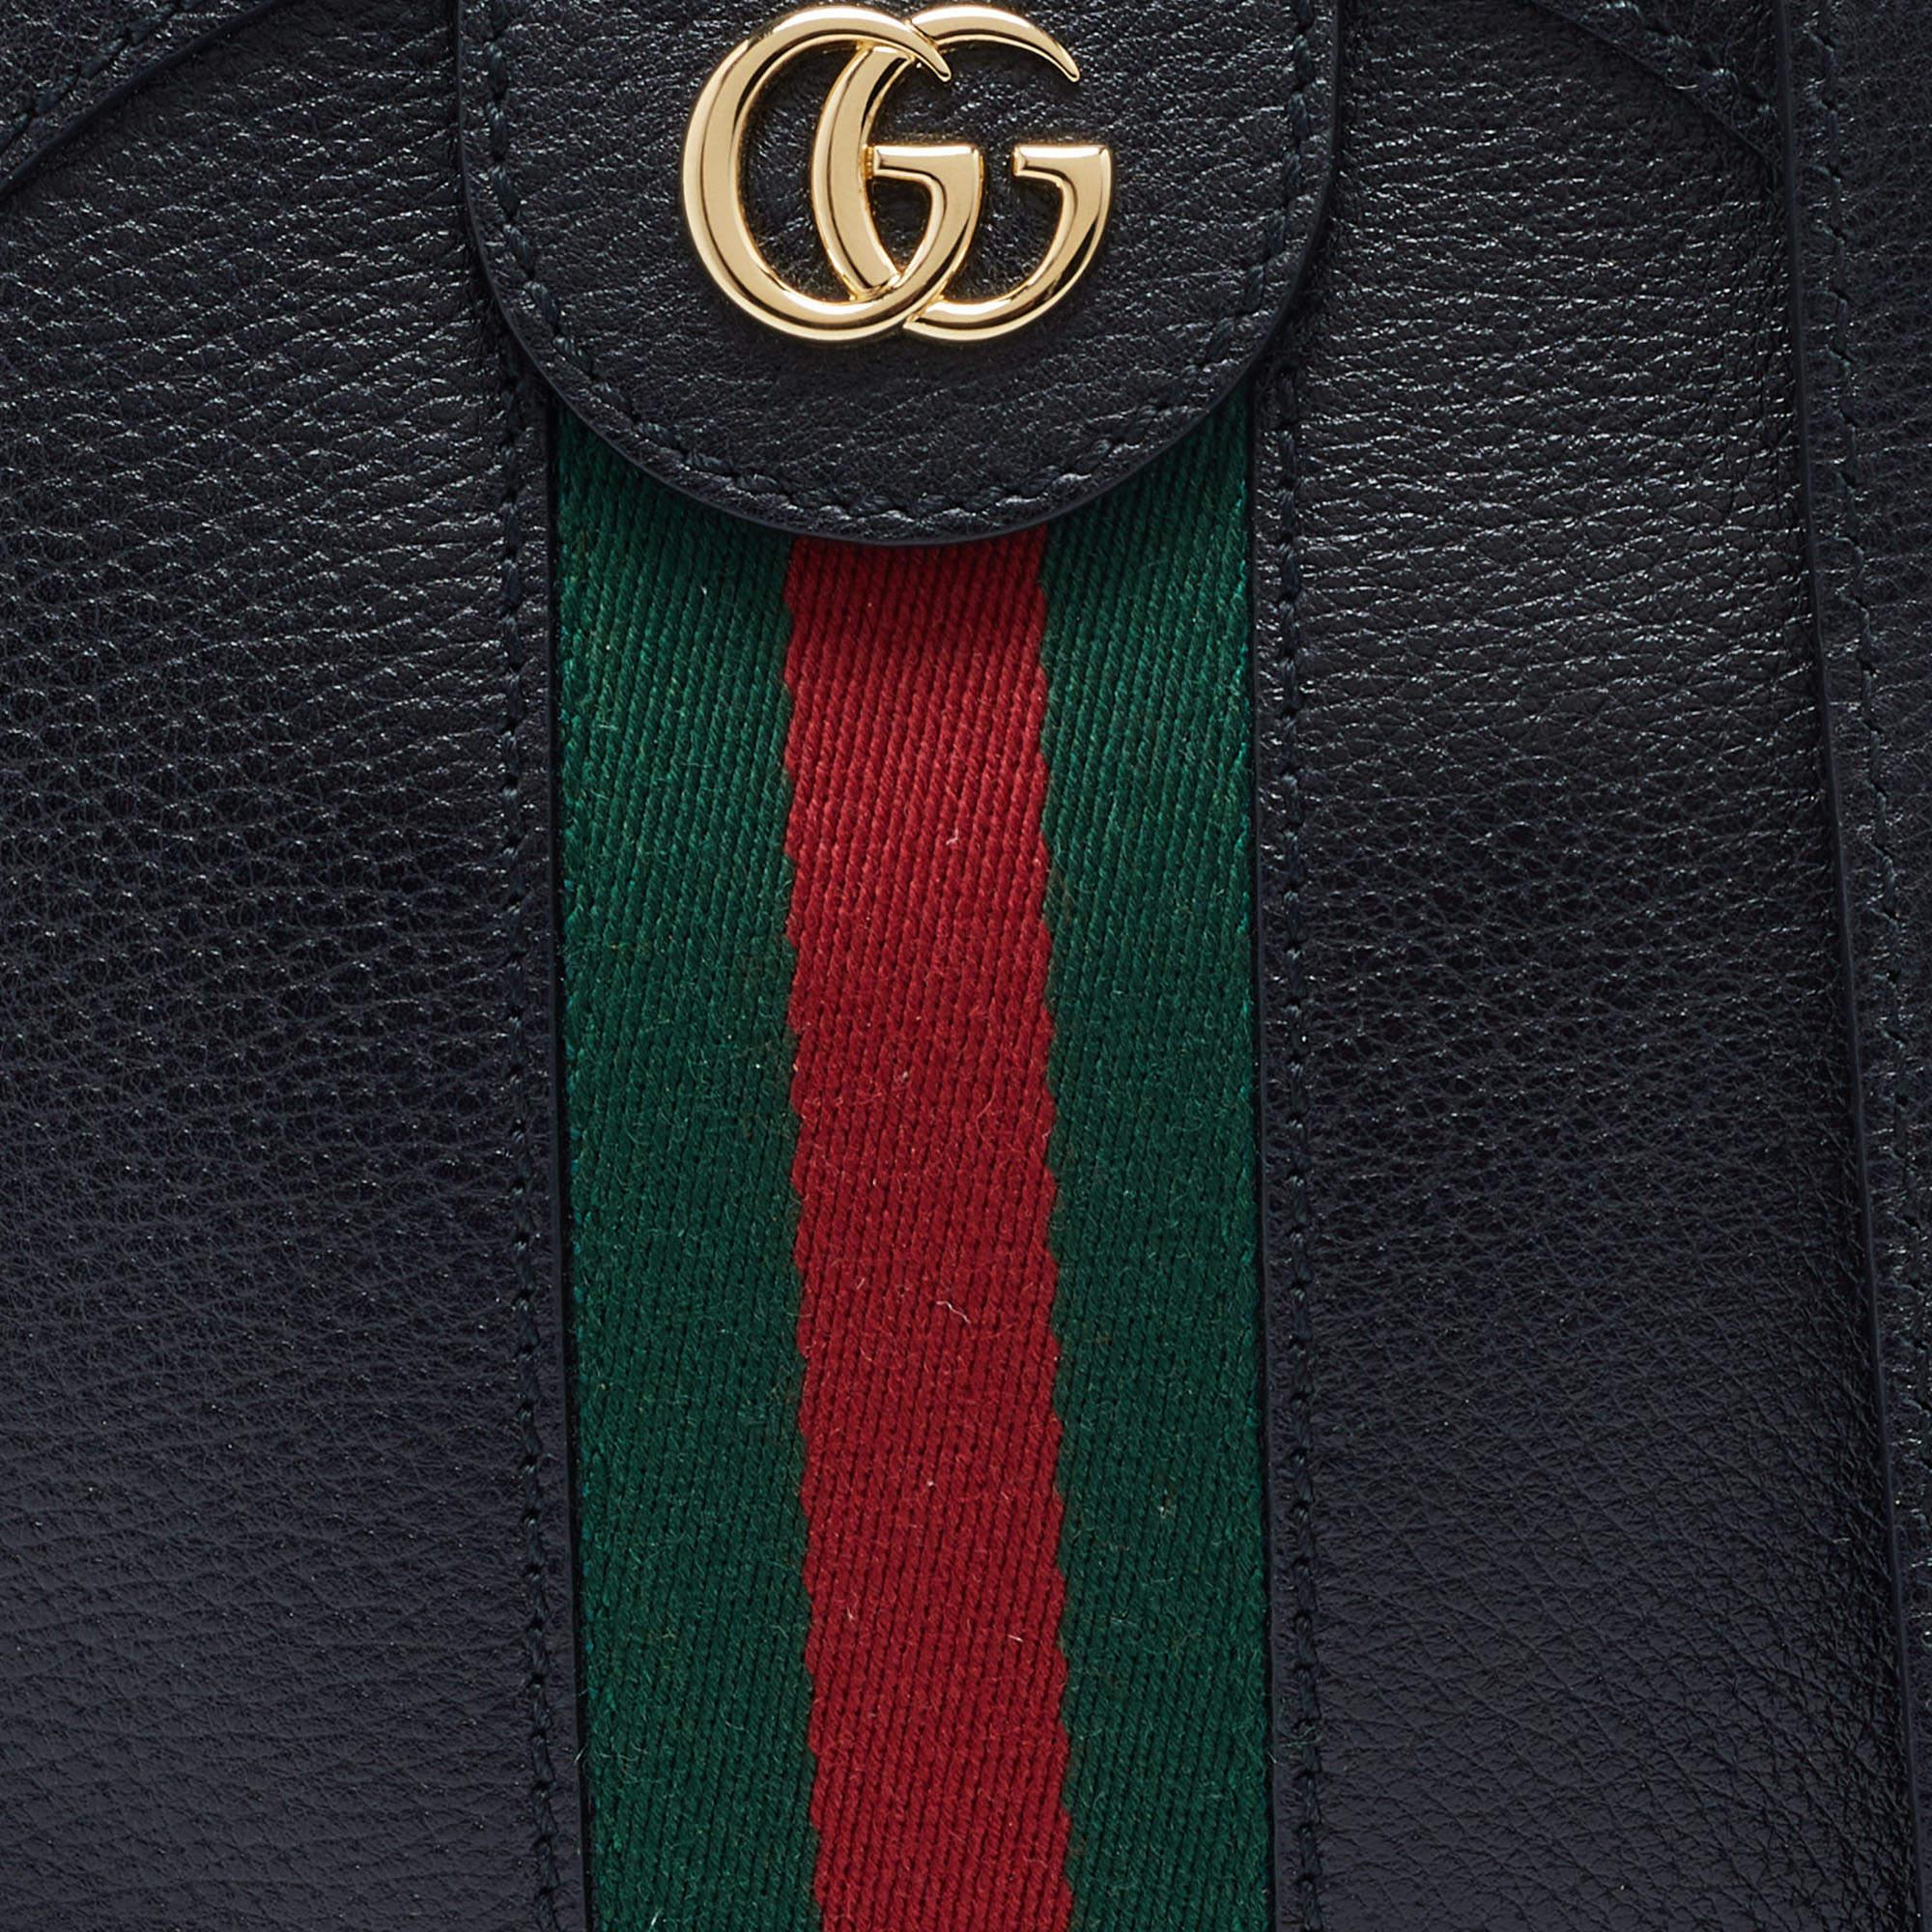 Women's Gucci Black Leather Mini Ophidia Round Shoulder Bag